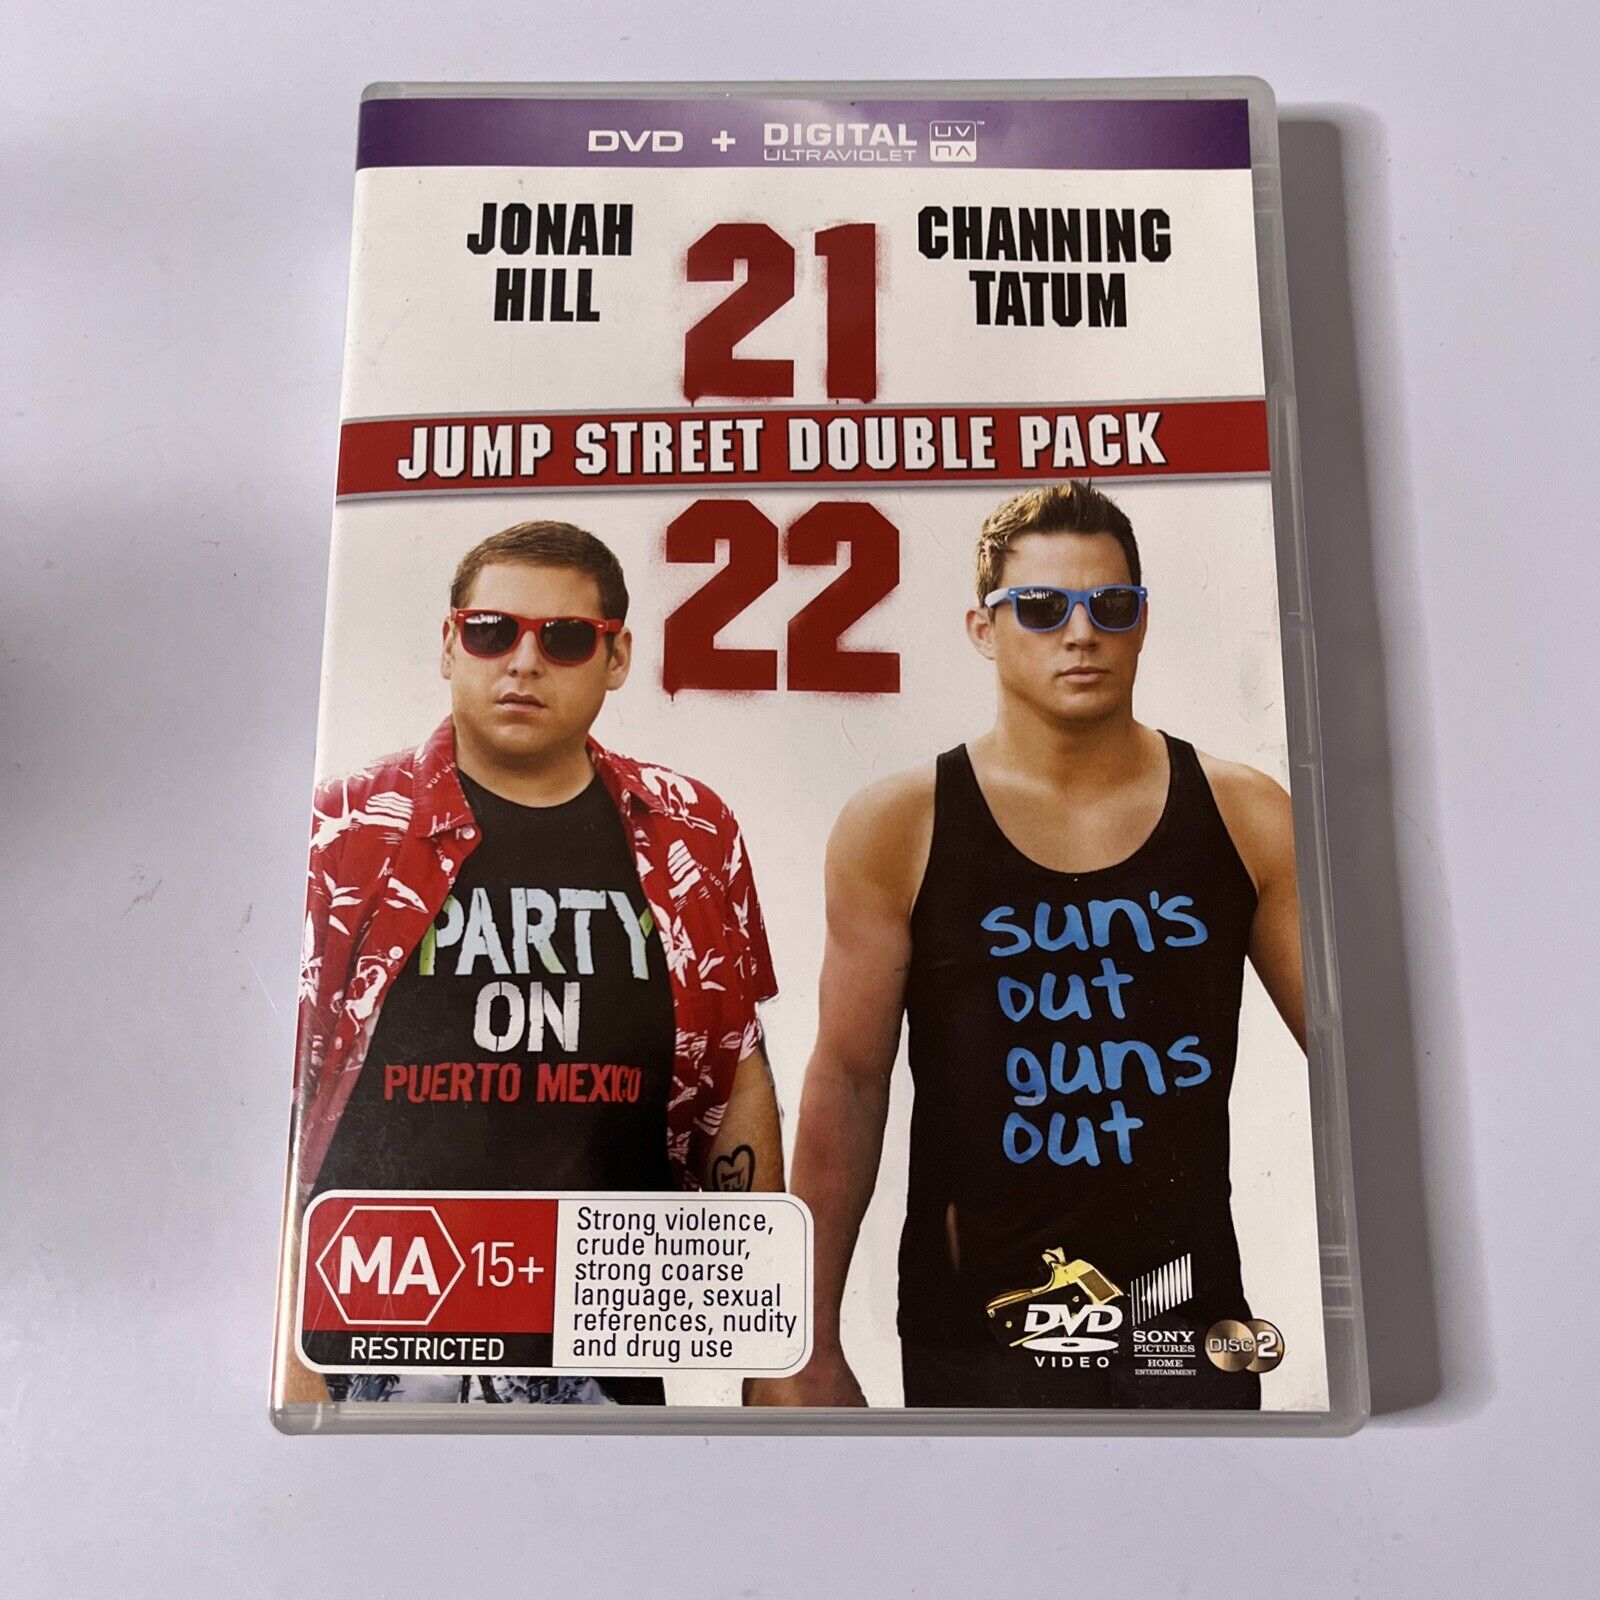 22 jump street dvd cover